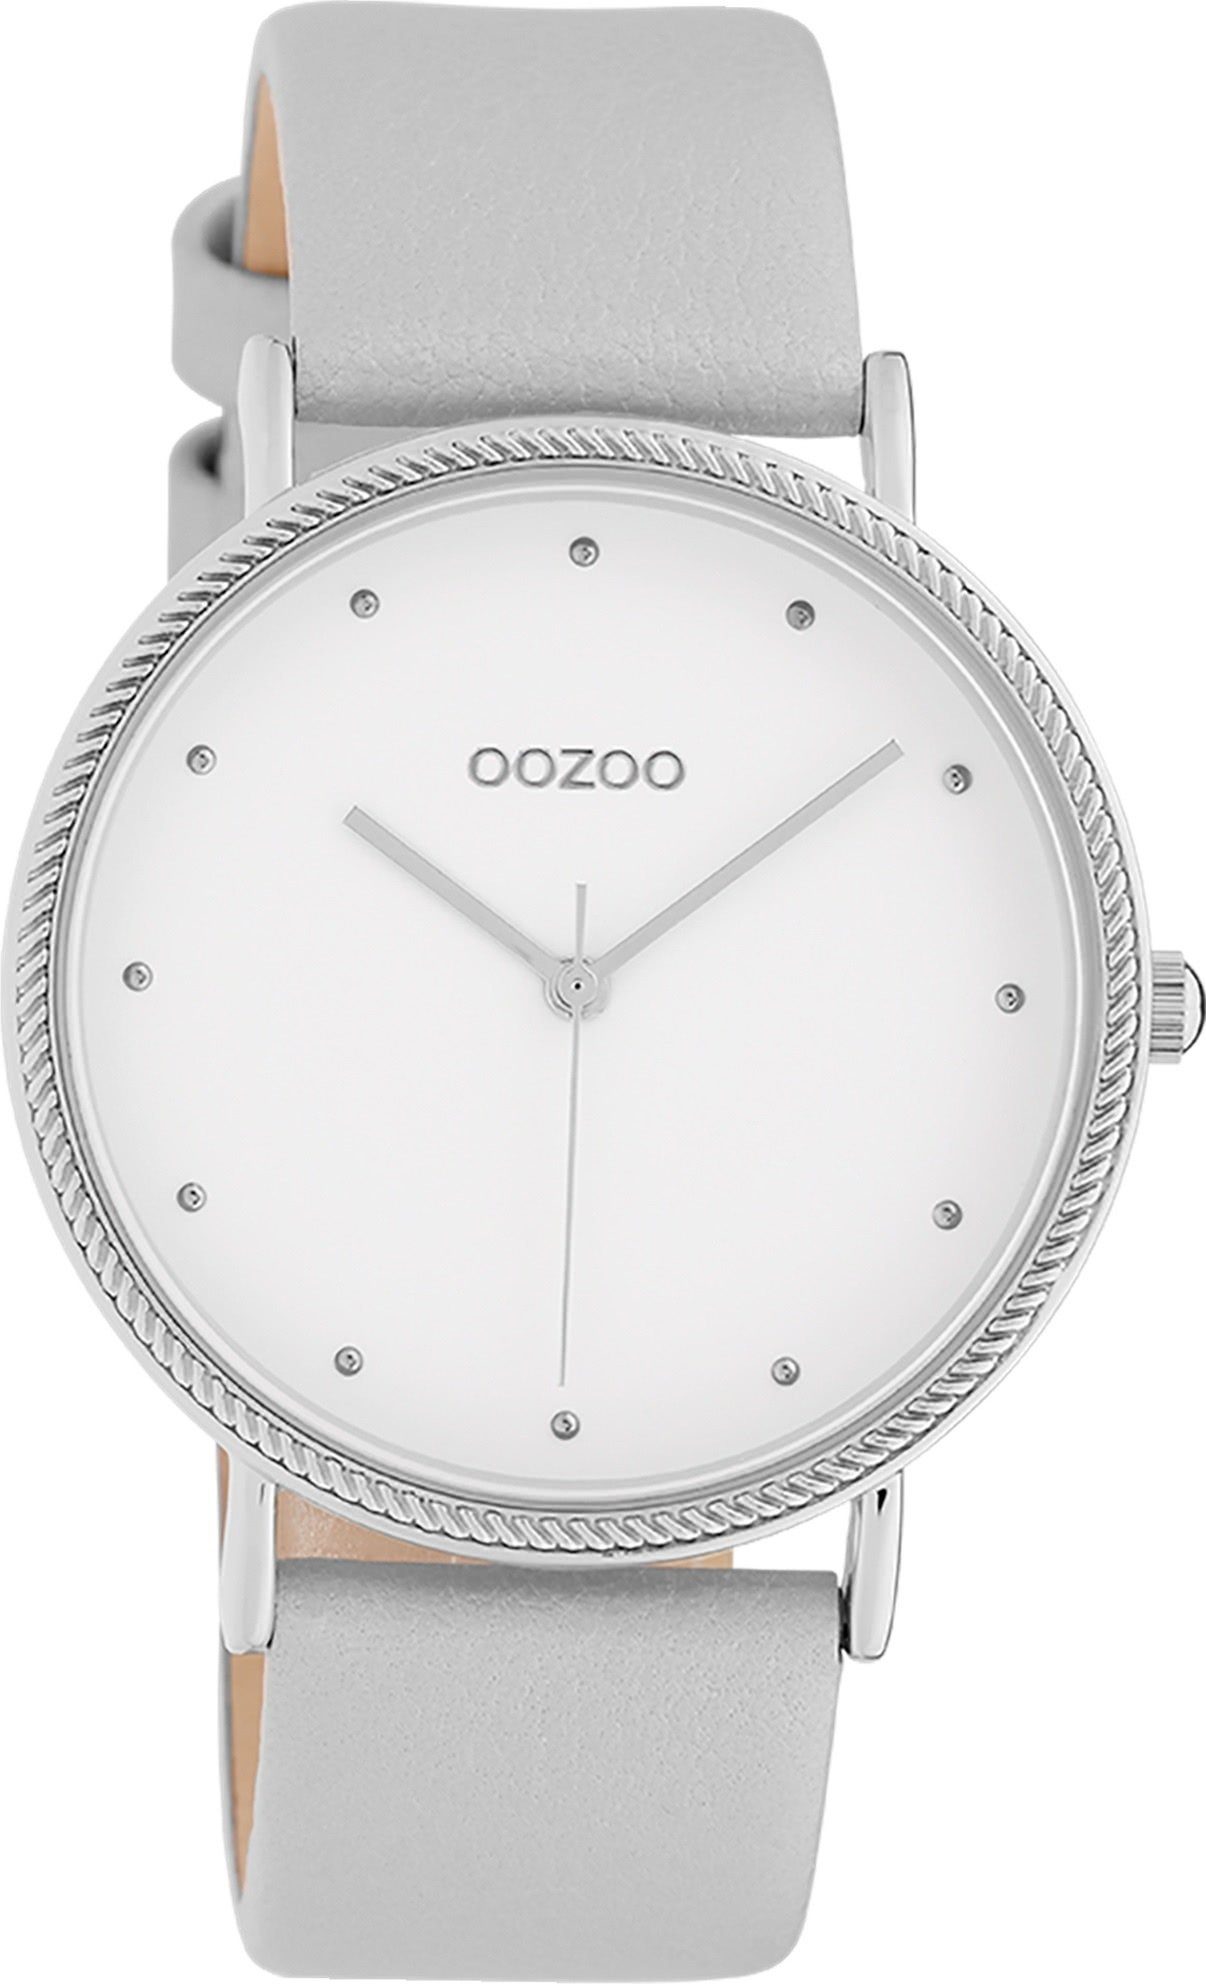 OOZOO Quarzuhr Oozoo Damen Armbanduhr silbergrau Analog, Damenuhr rund, groß (ca. 40mm), Lederarmband silber, grau, Elegant